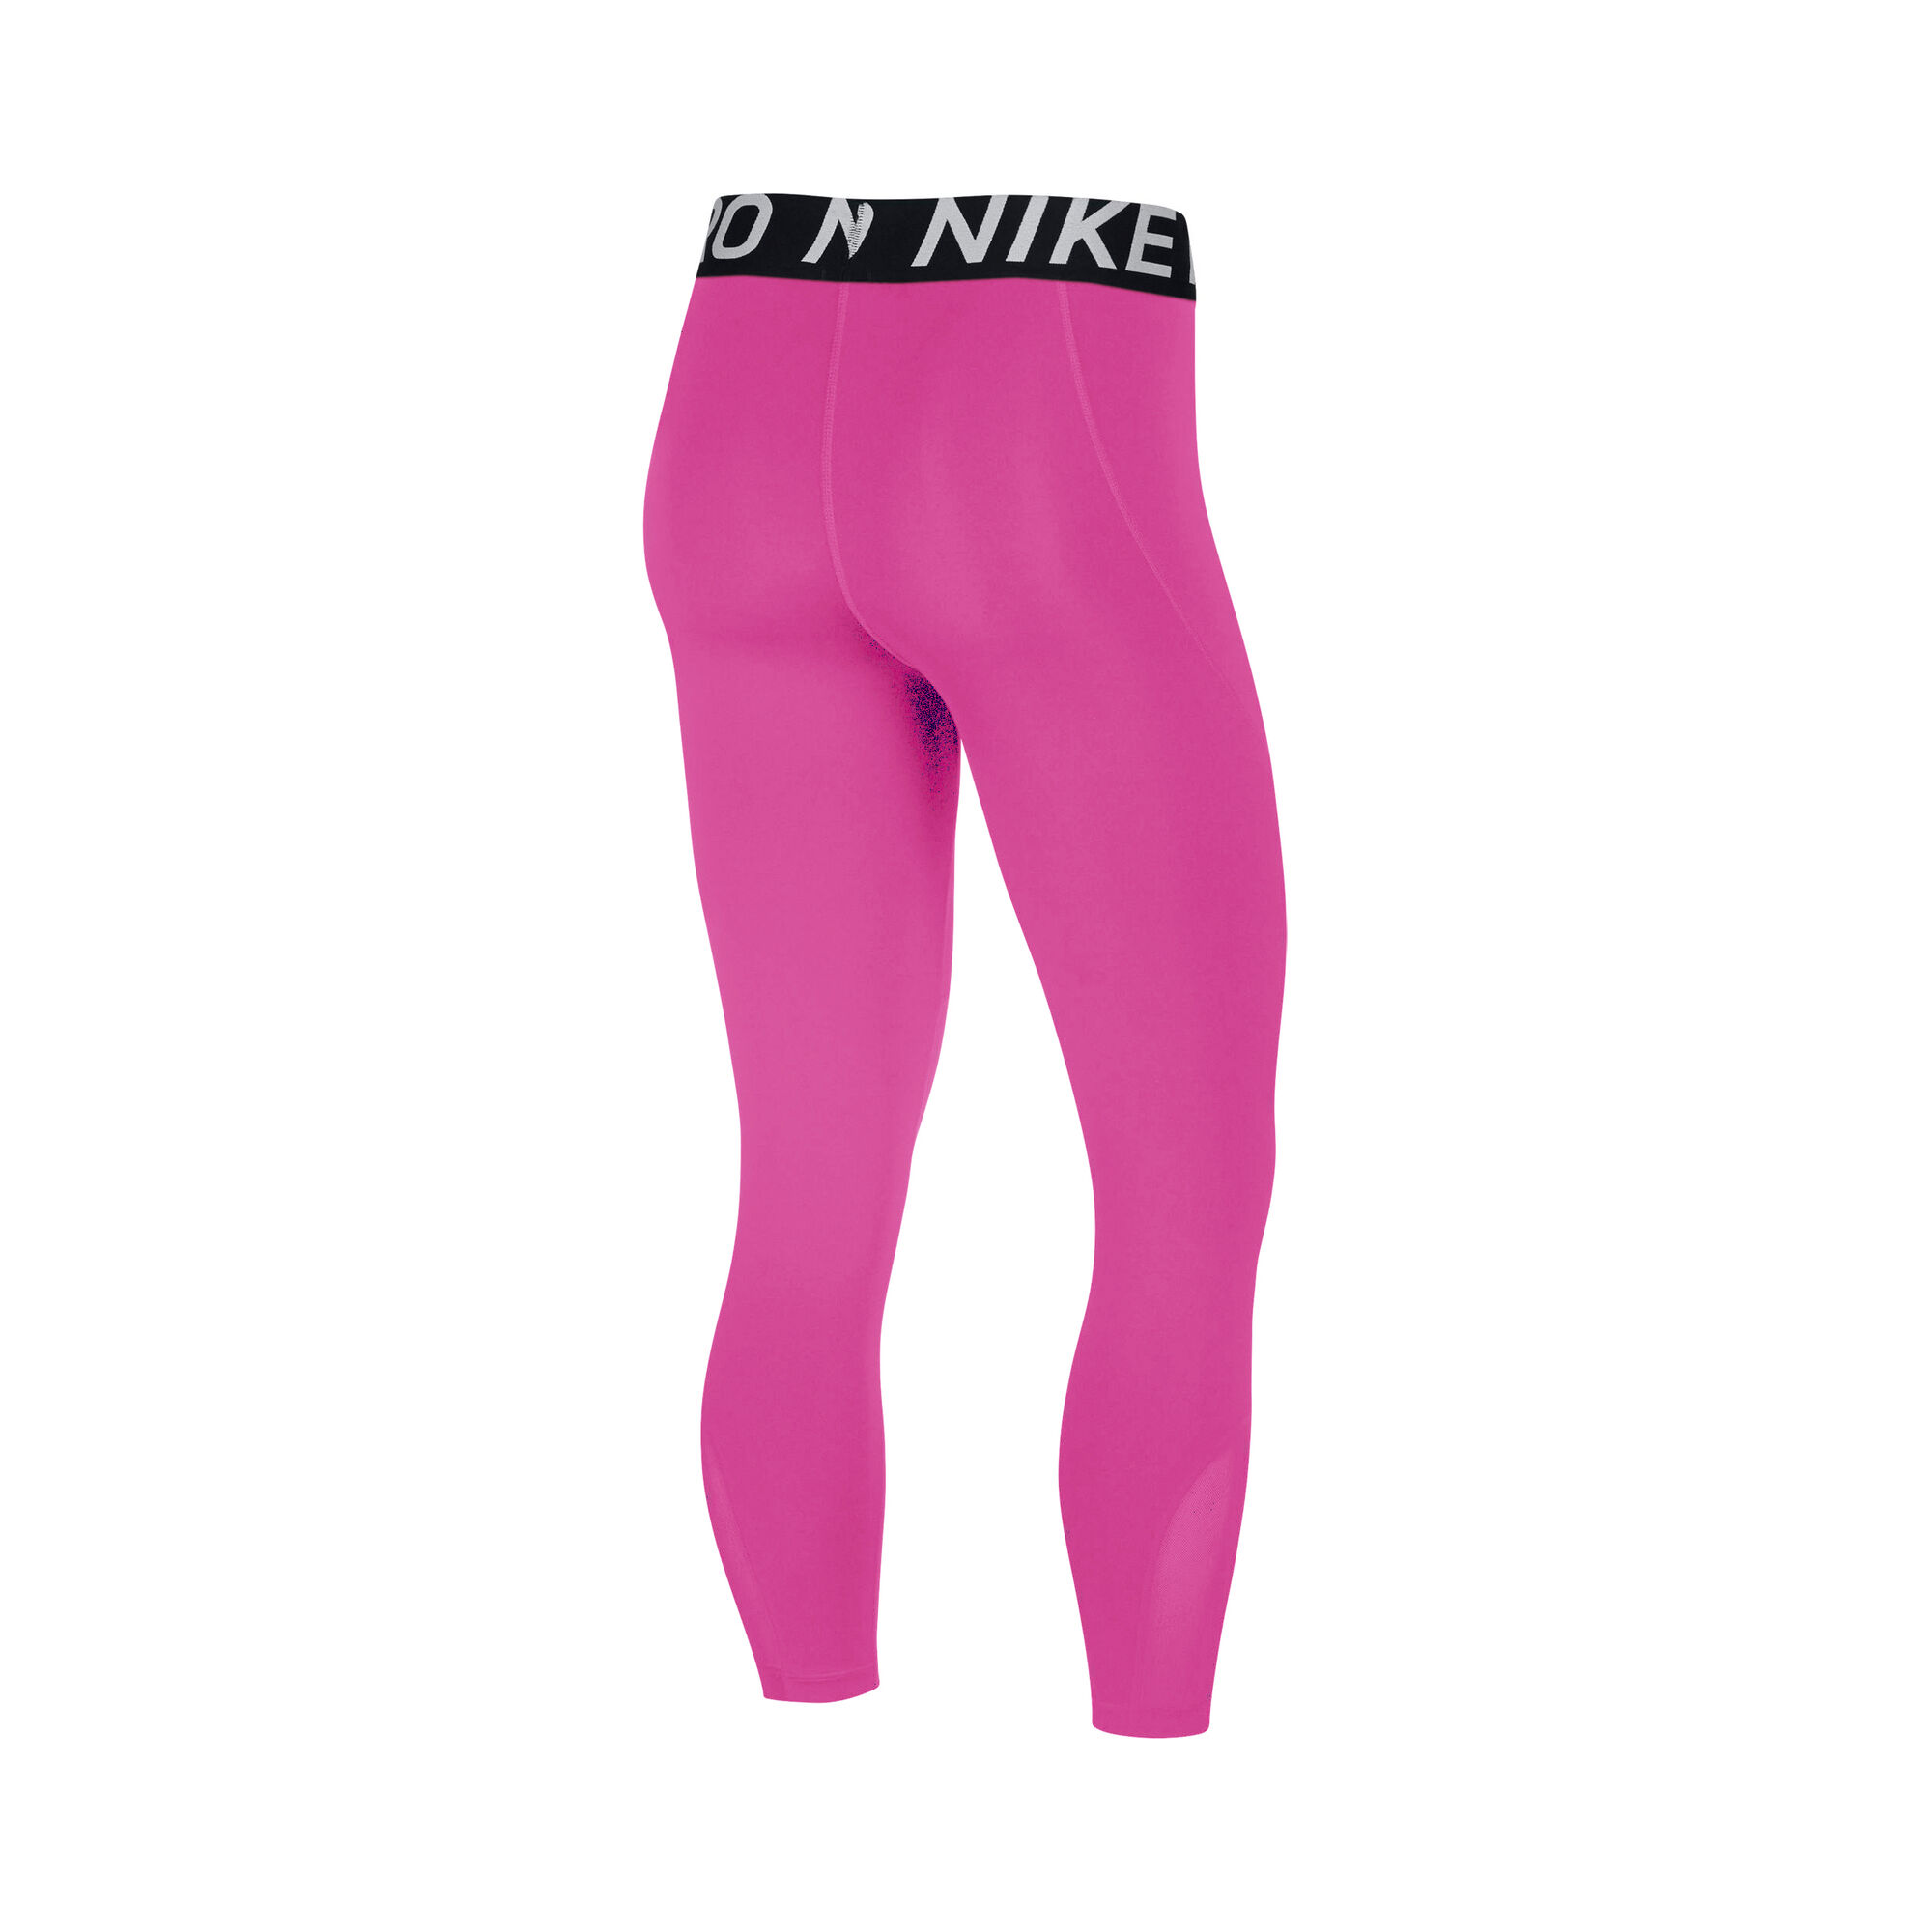 L. 3/4 TIGHTS BE ONE Training leggings - Women - Diadora Online Store DK